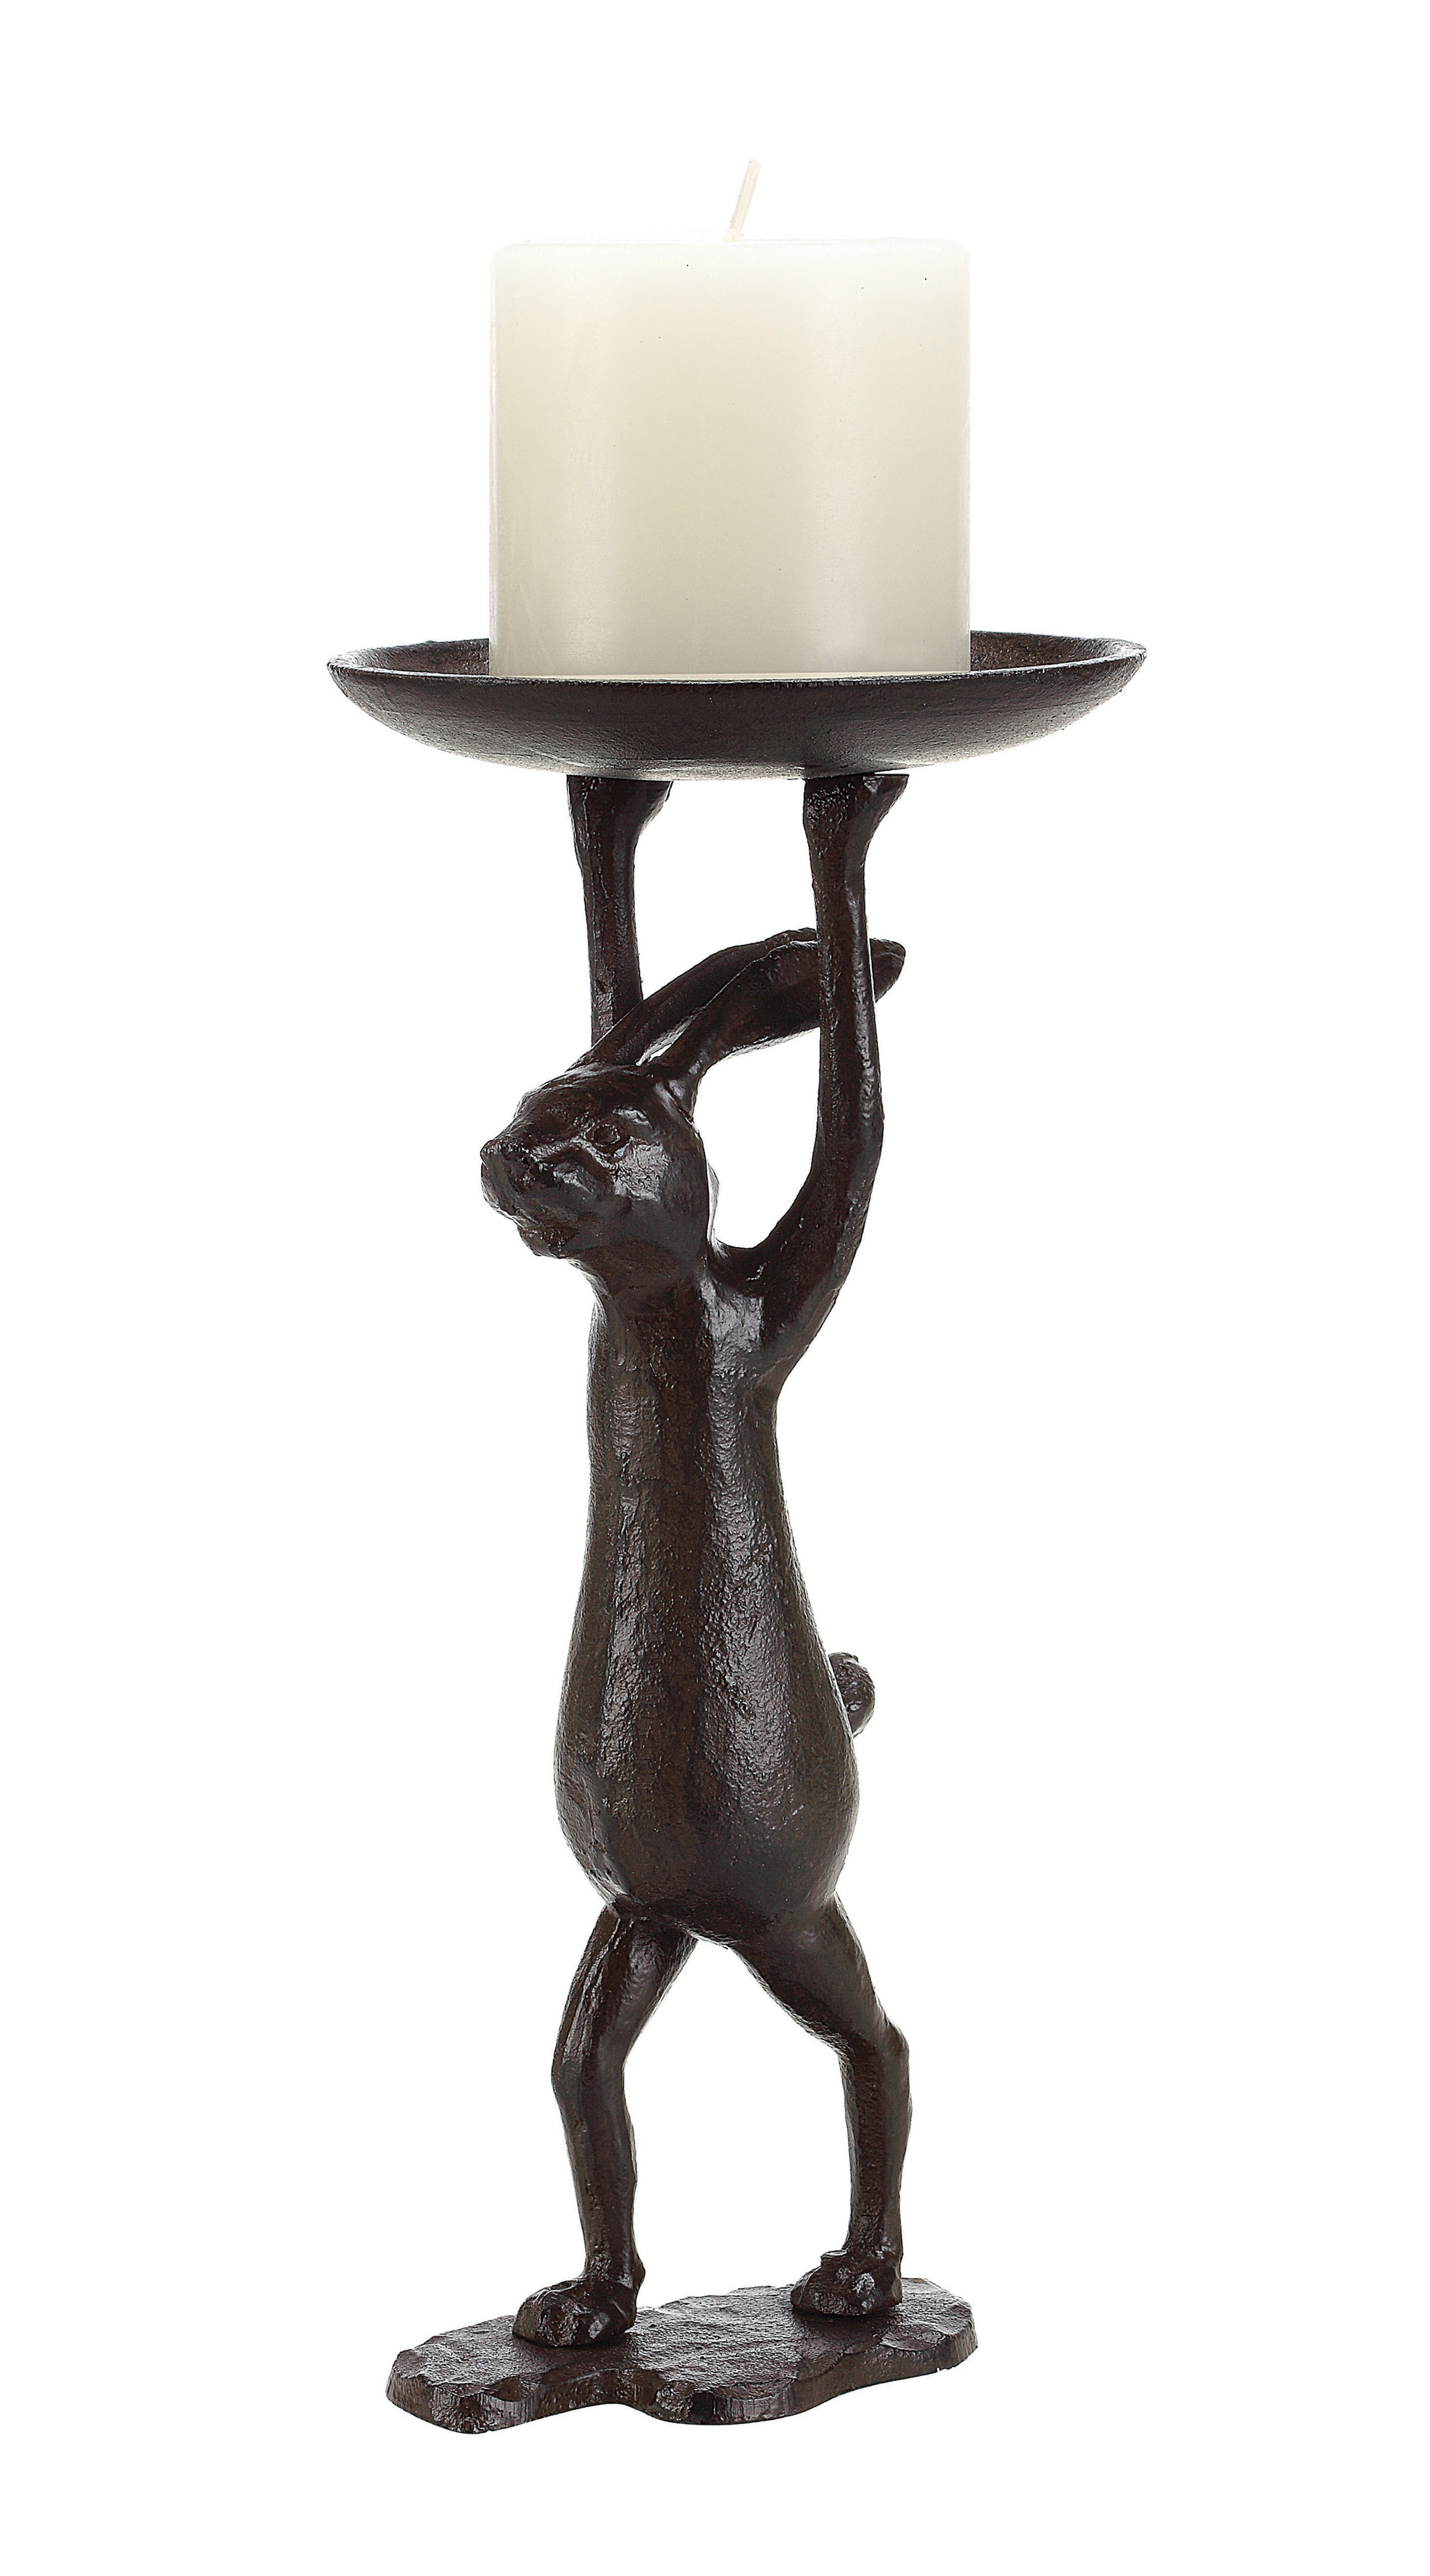 Cast Iron Rabbit Candleholder in Antiqued Bronze Finish - Nomad Home